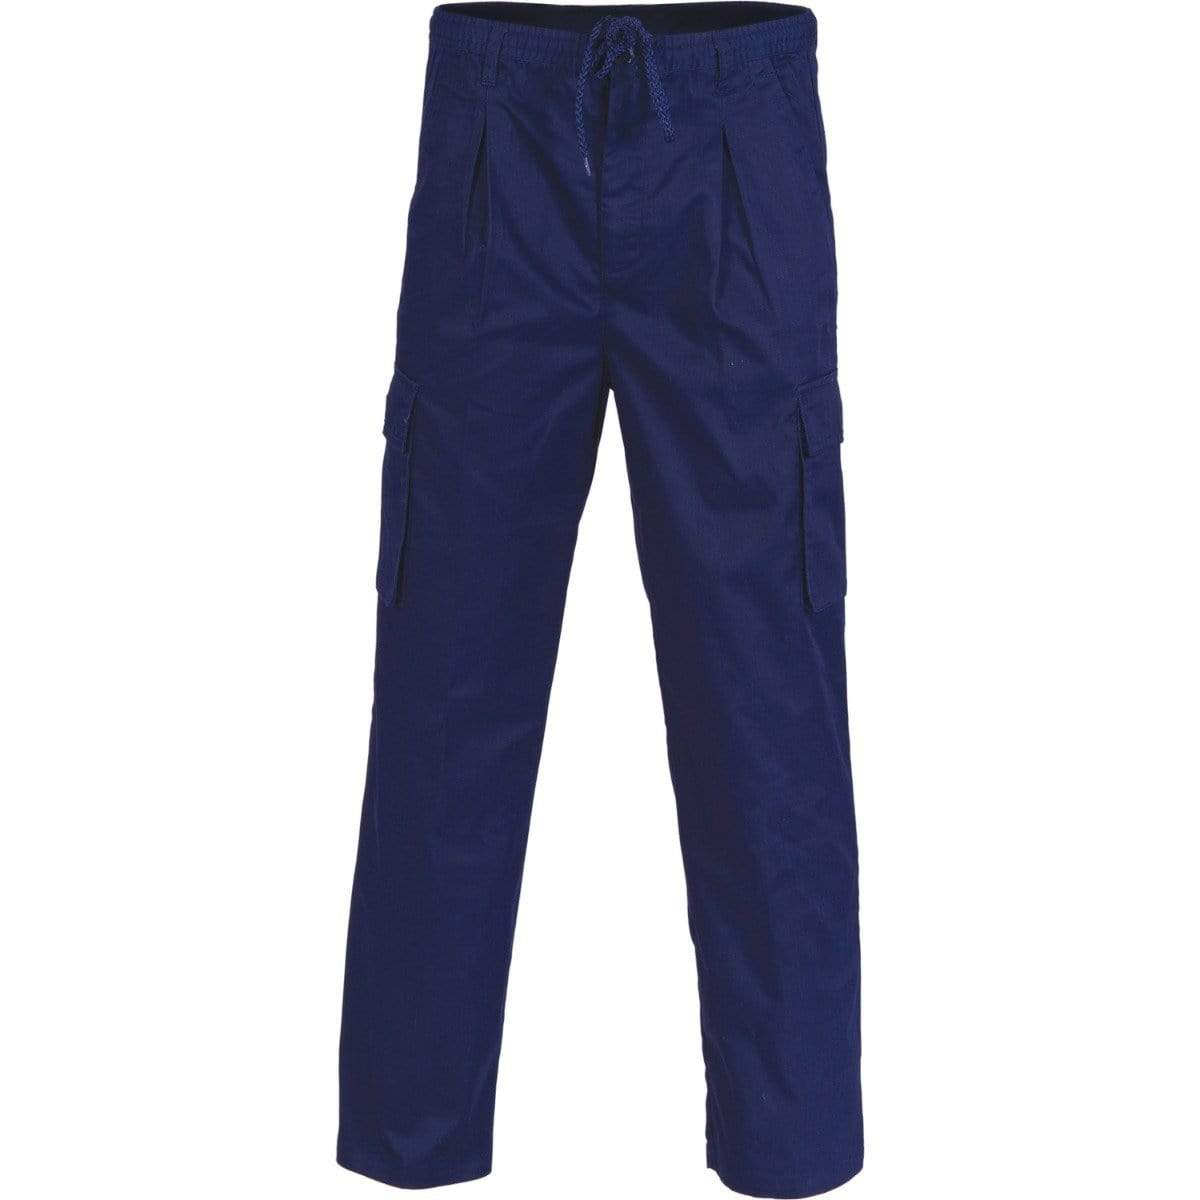 Dnc Workwear Polyester Cotton 3-in-1 Cargo Pants - 1504 Work Wear DNC Workwear Navy XS 